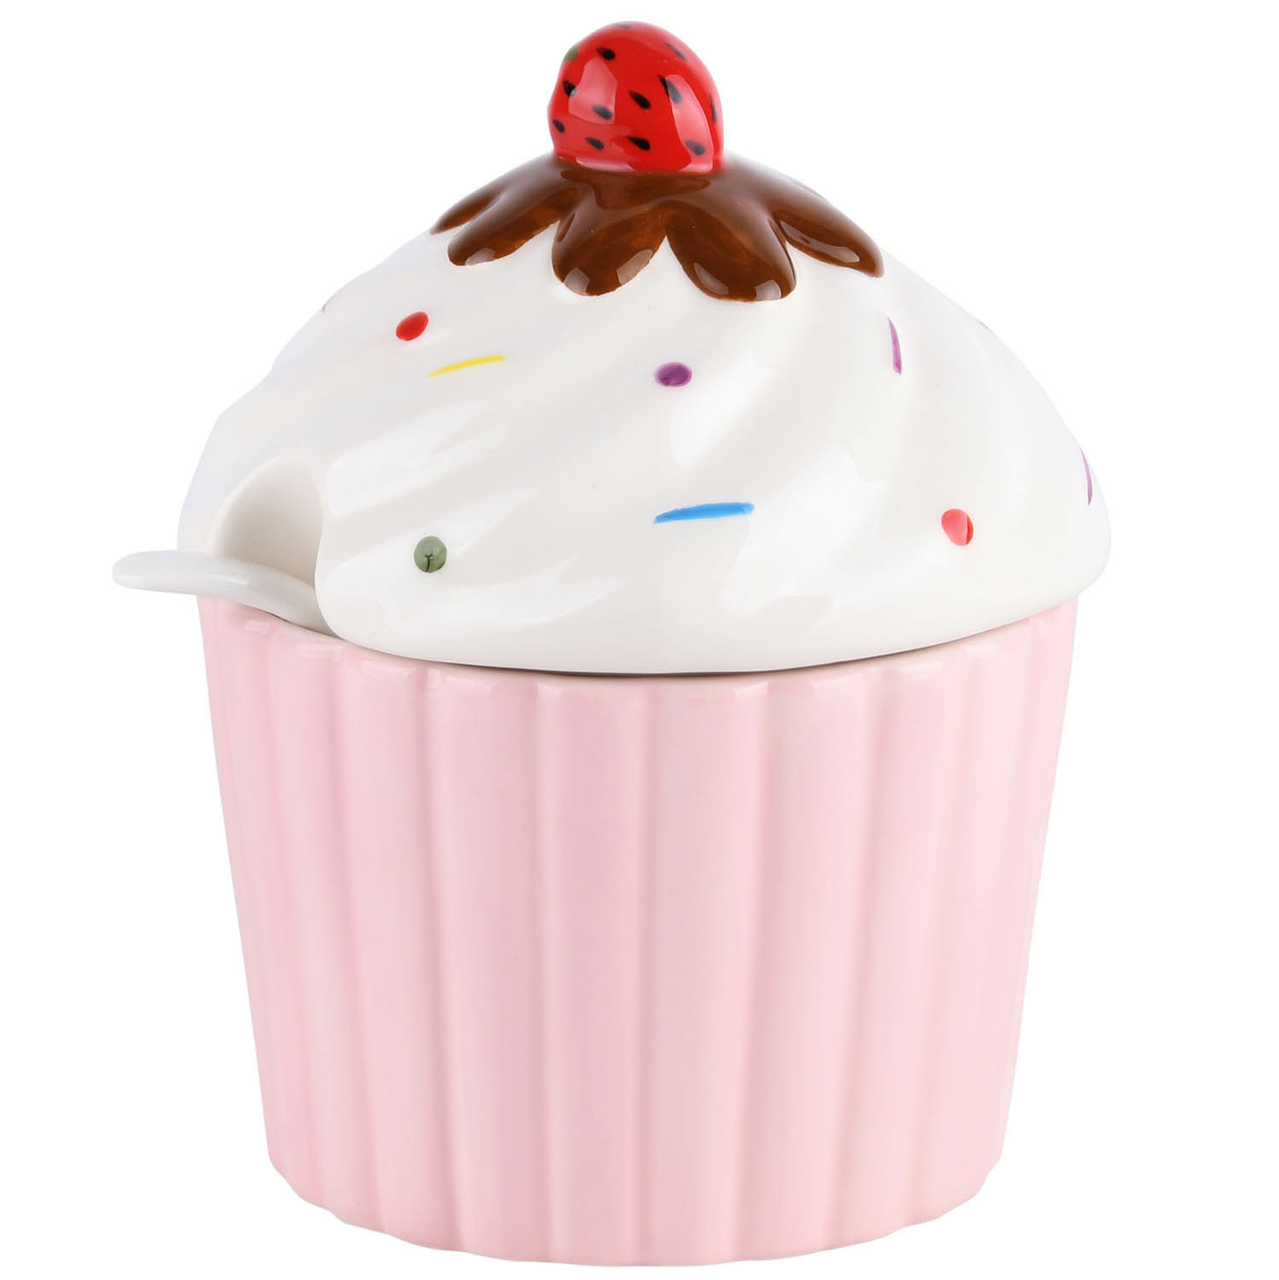 Dekoratief | Suikerpotje m/lepel milkshake, wit/roze, keramiek, 10x10x13cm | A220415